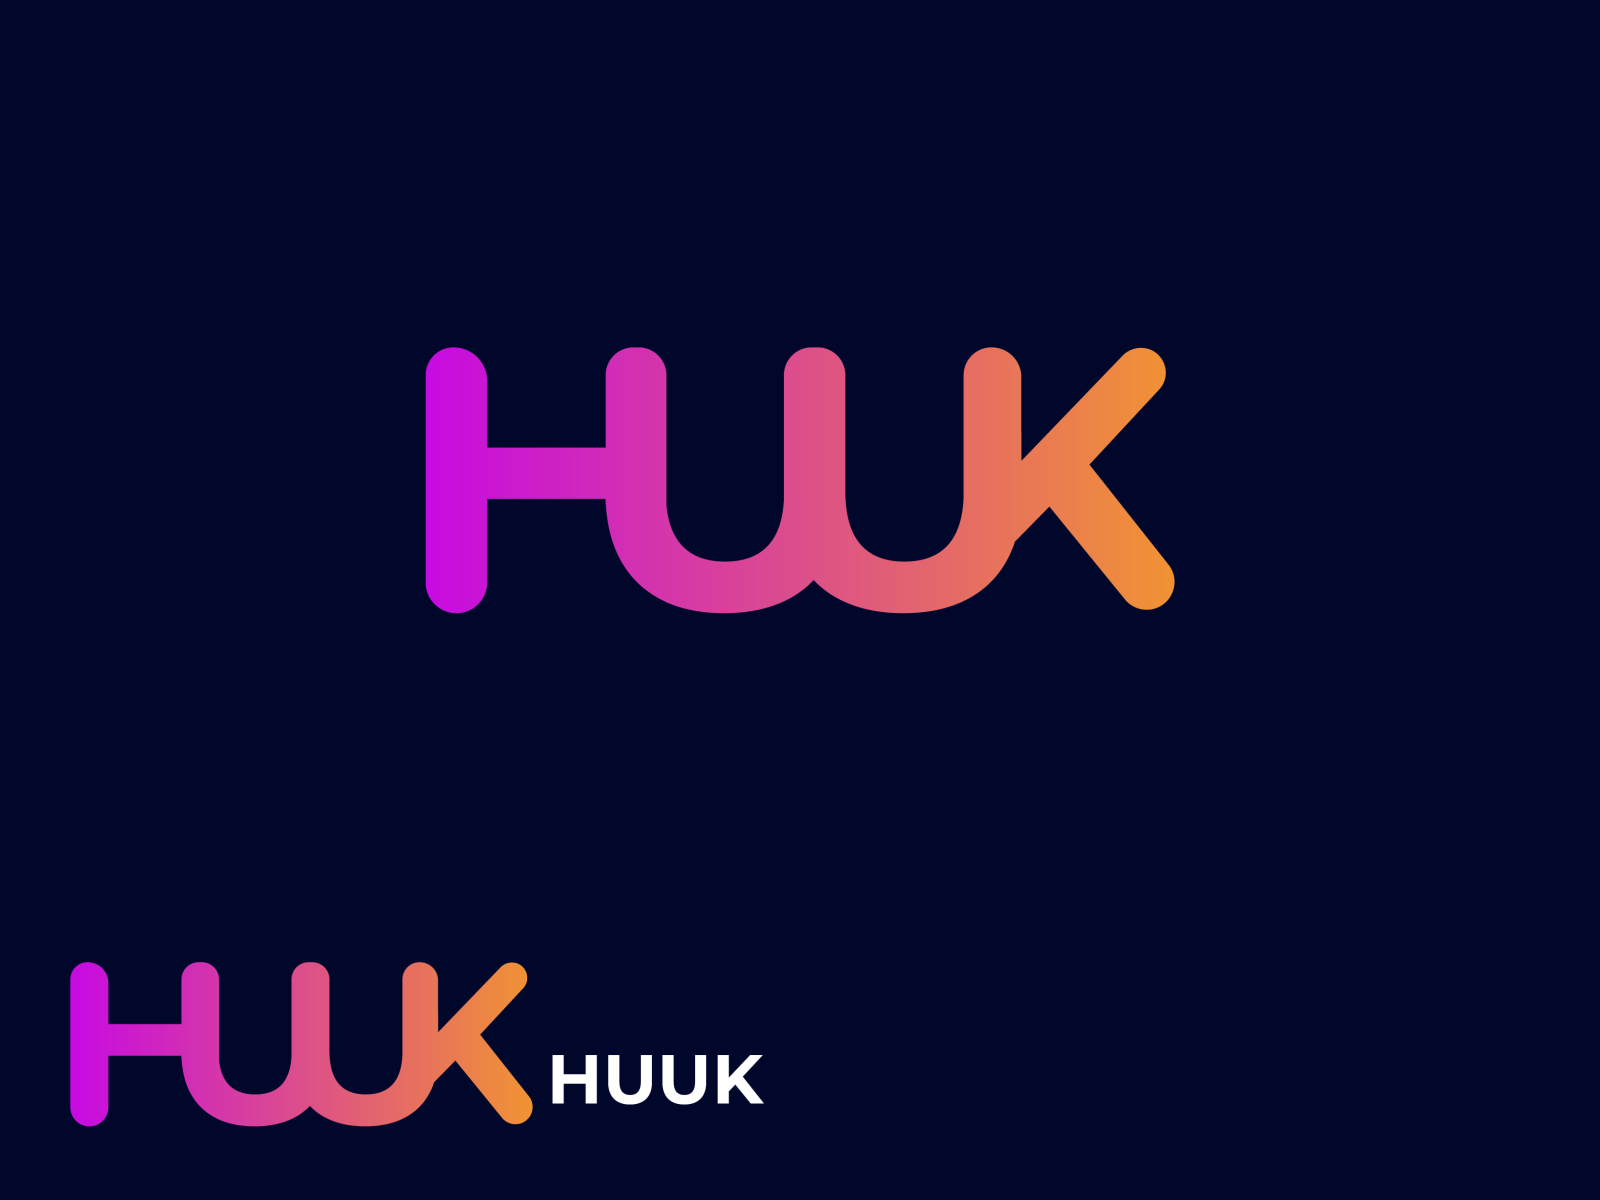 HUUK company Logo & (H+W+K) Letter Logo Mark by Liton Ahammed on Dribbble